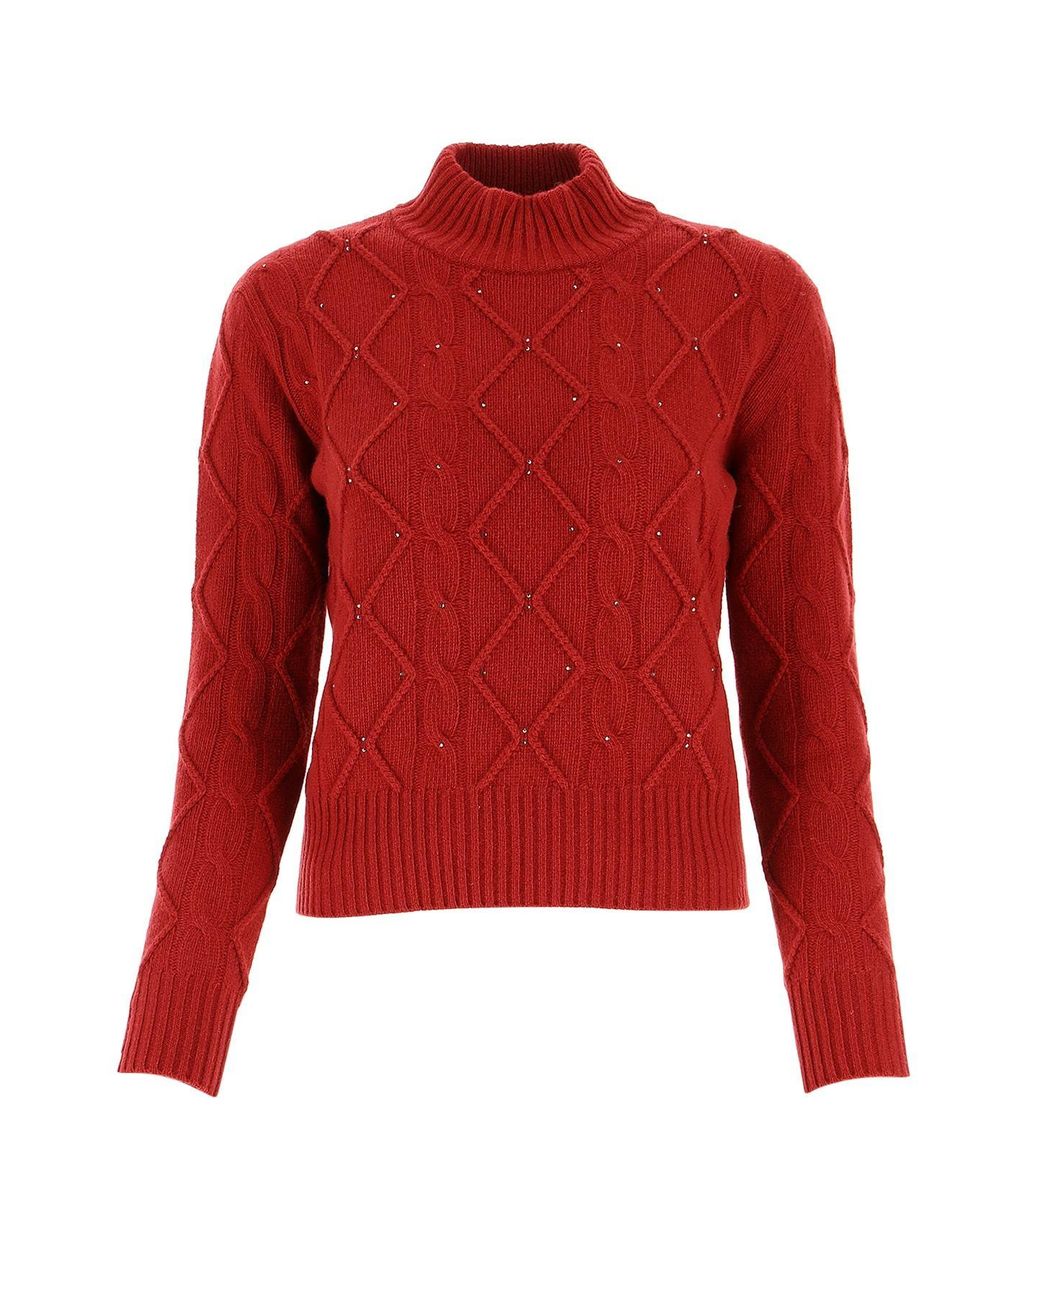 Max Mara Studio Wool Turtleneck Sweater in Red - Lyst